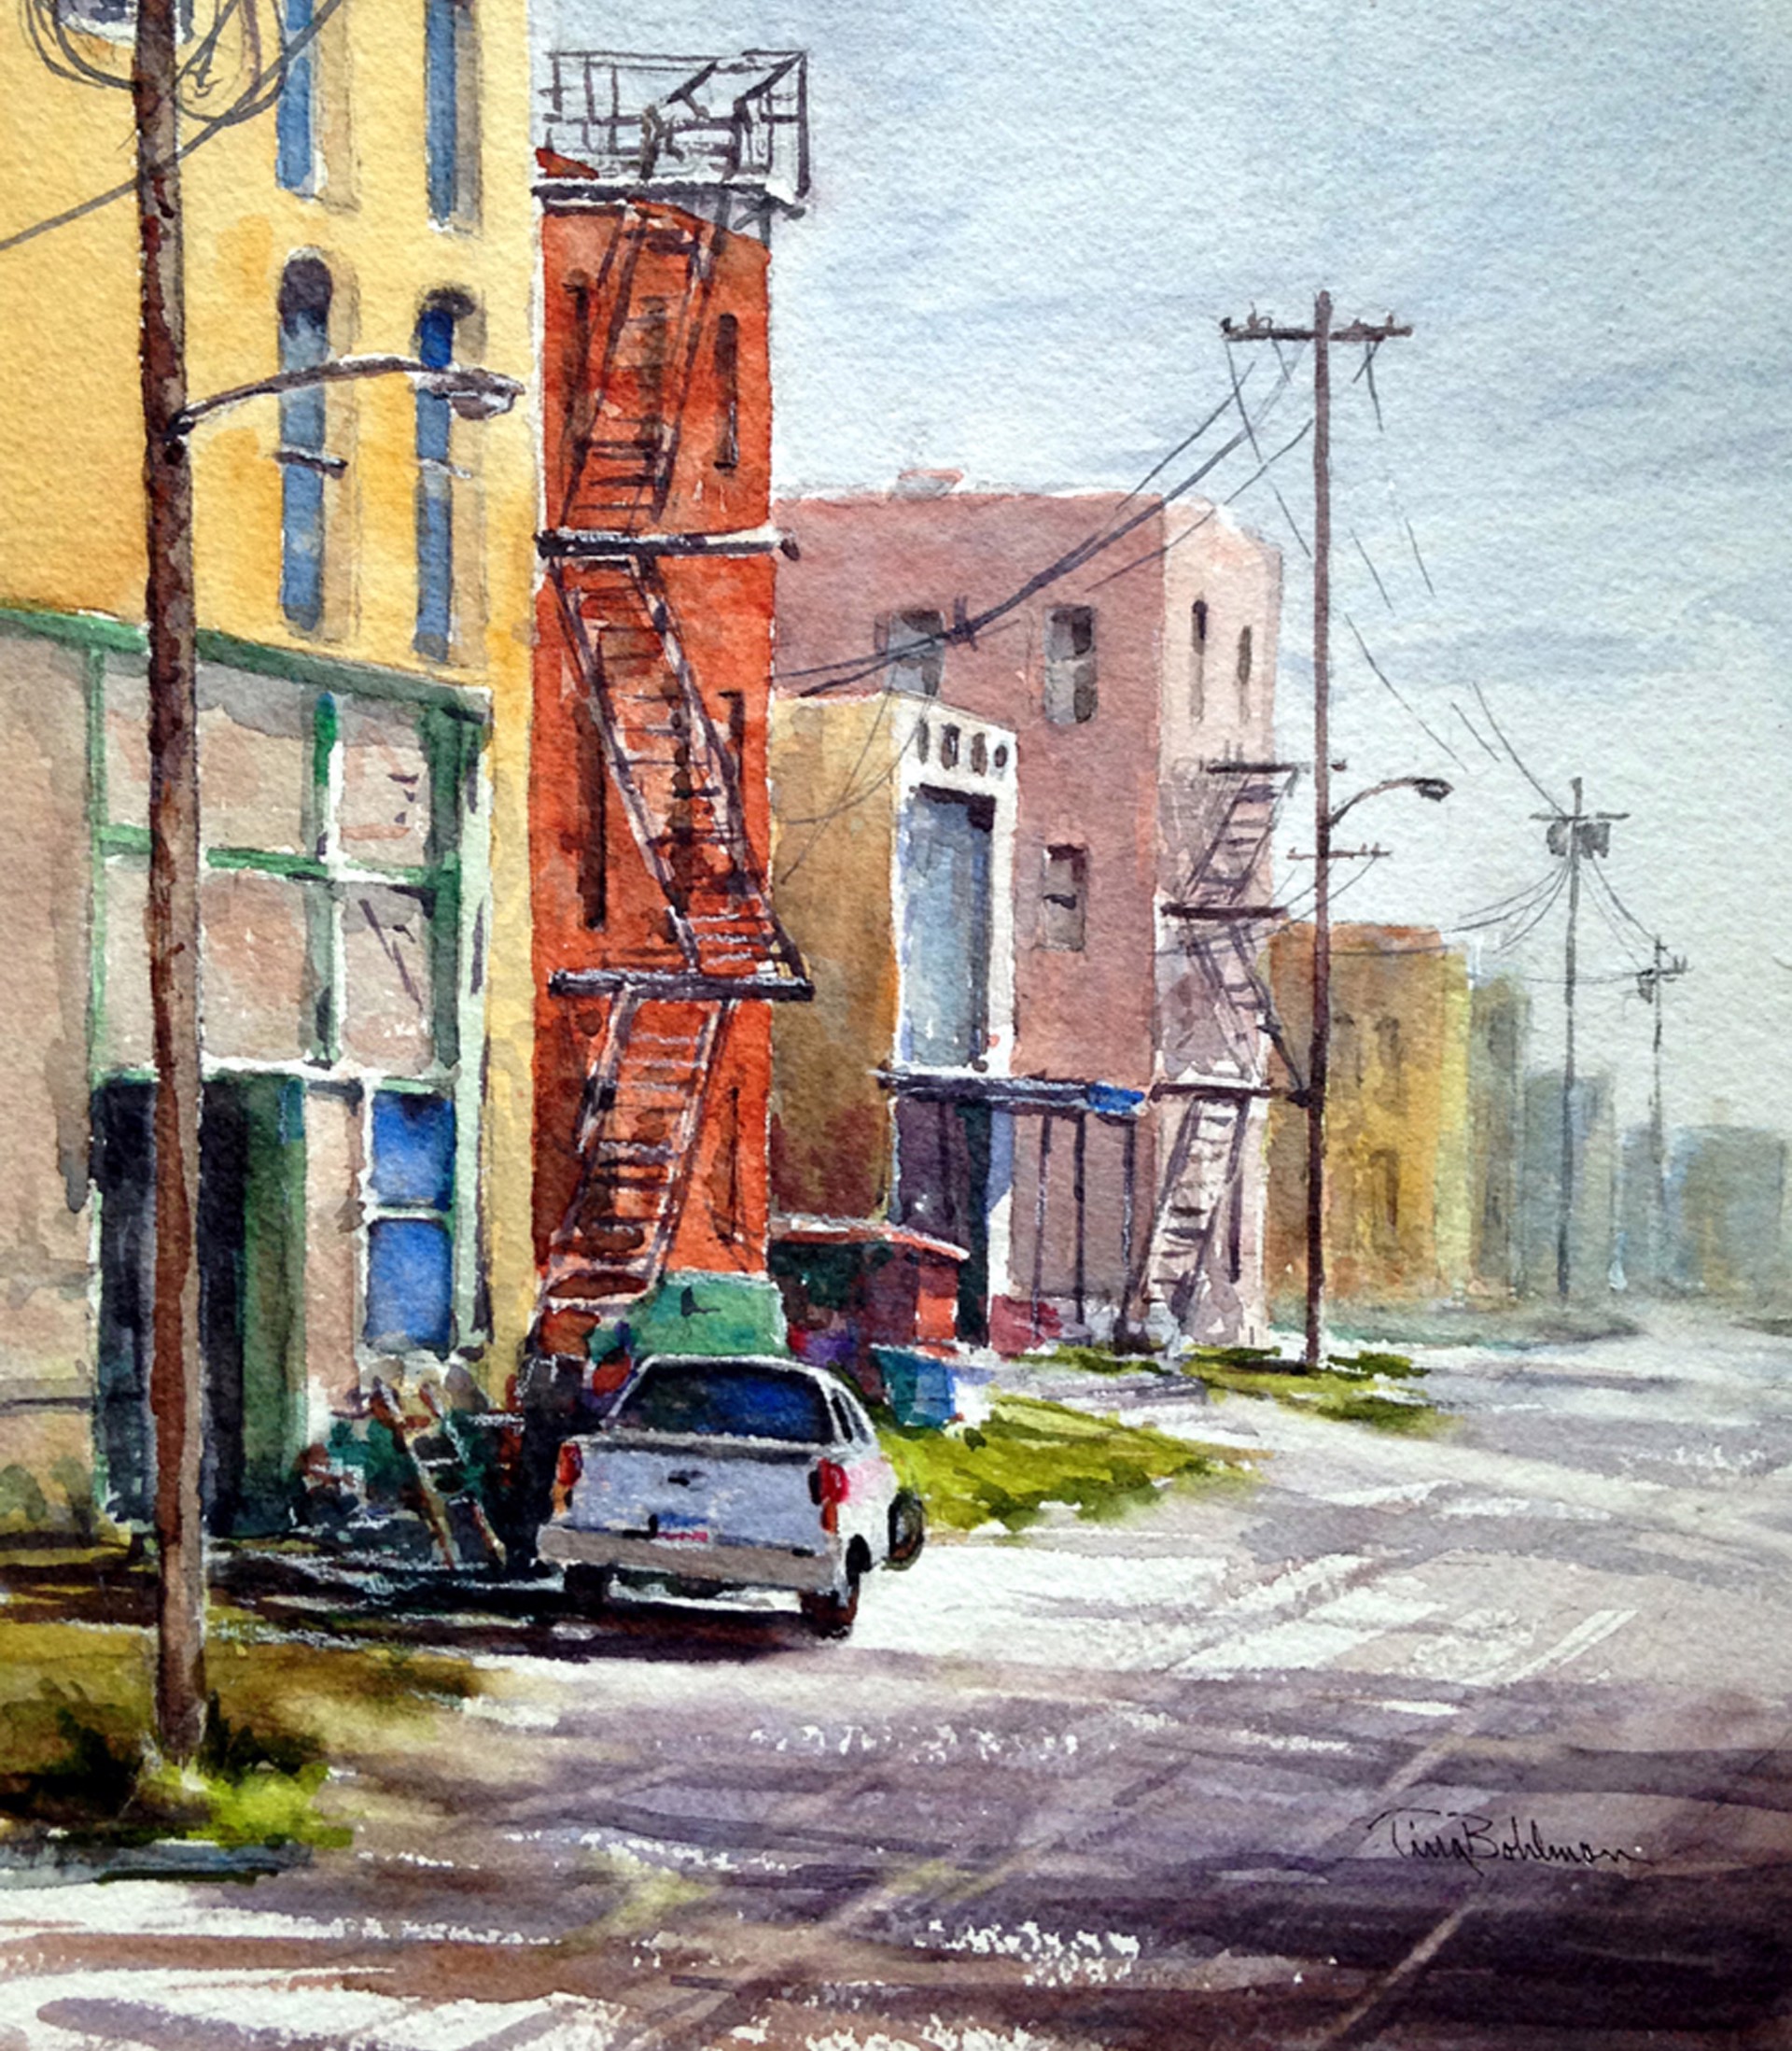 Back of Main Street by Tina Bohlman